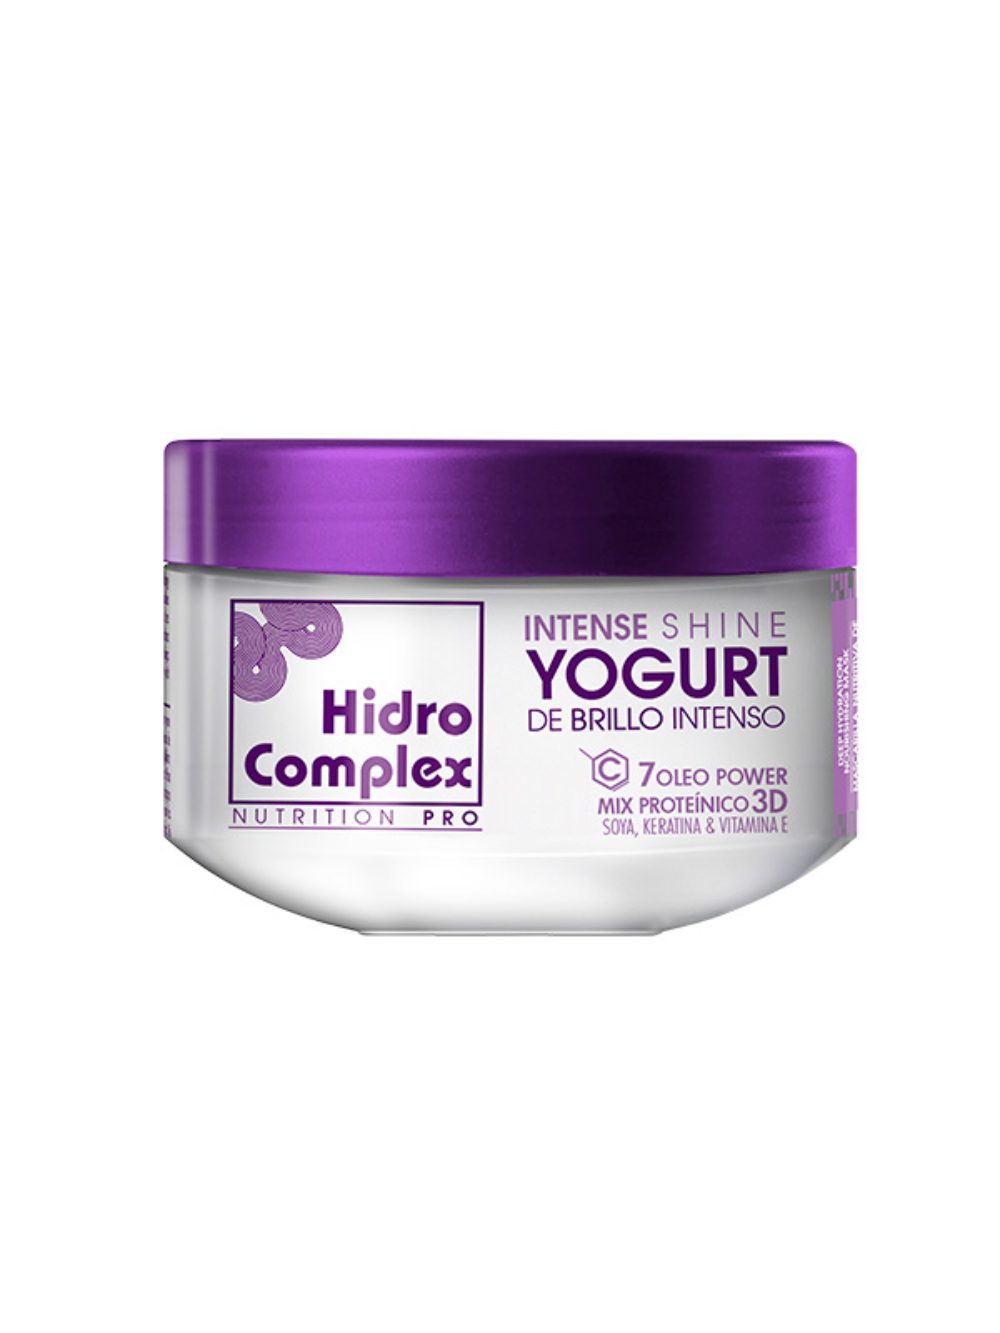 HidroComplex Intense Shine Yogurt Byspro